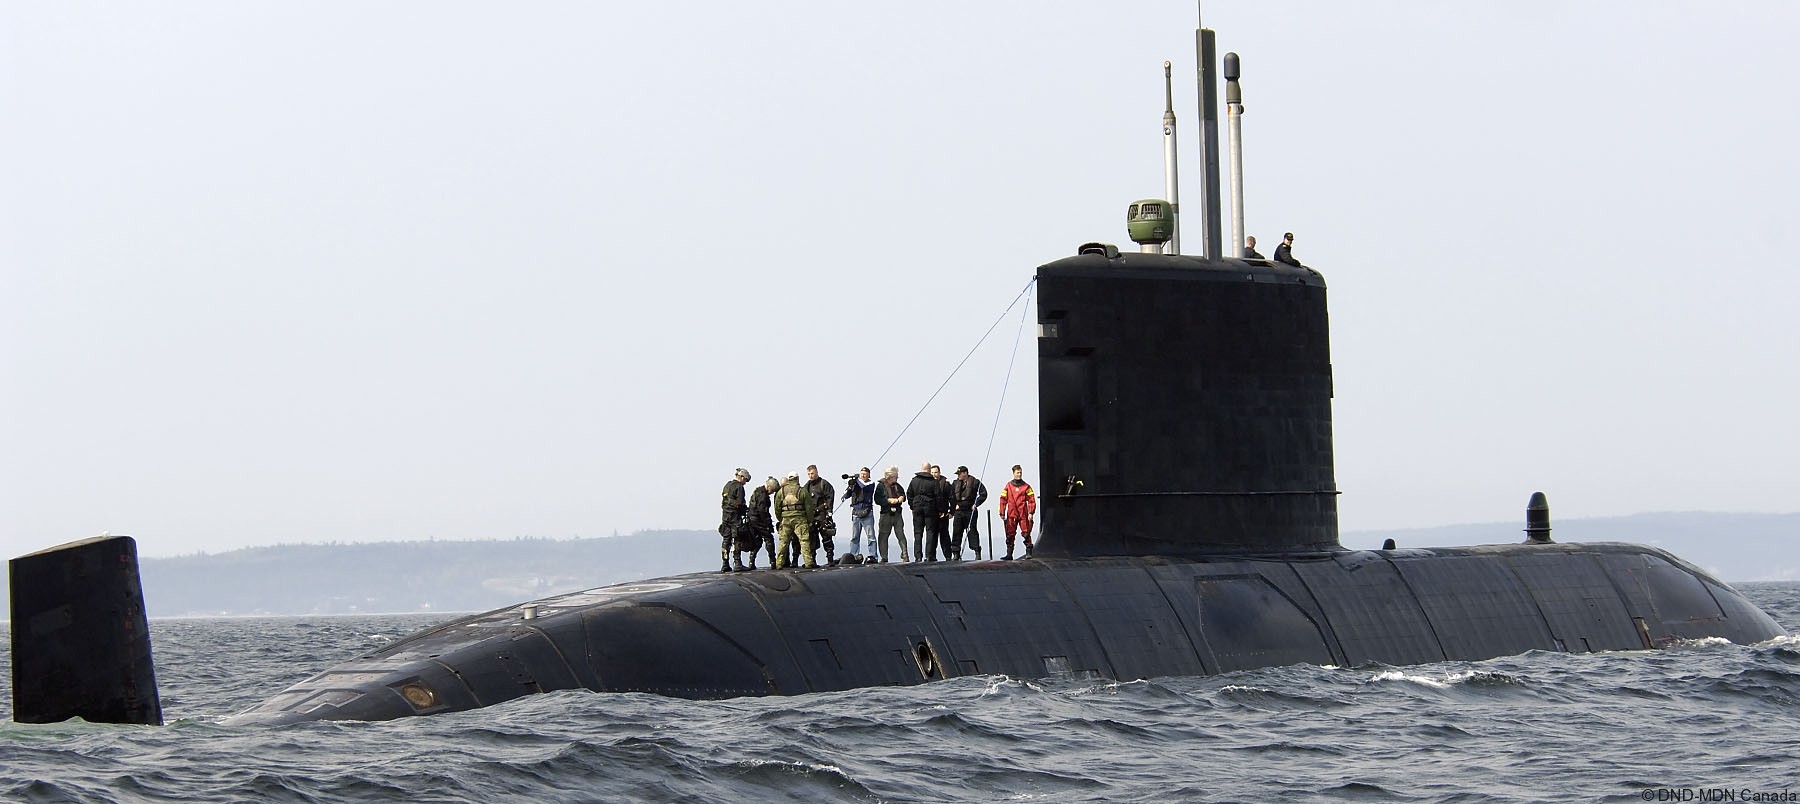 ssk-877 hmcs windsor victoria upholder class attack submarine hunter killer ncsm royal canadian navy 11